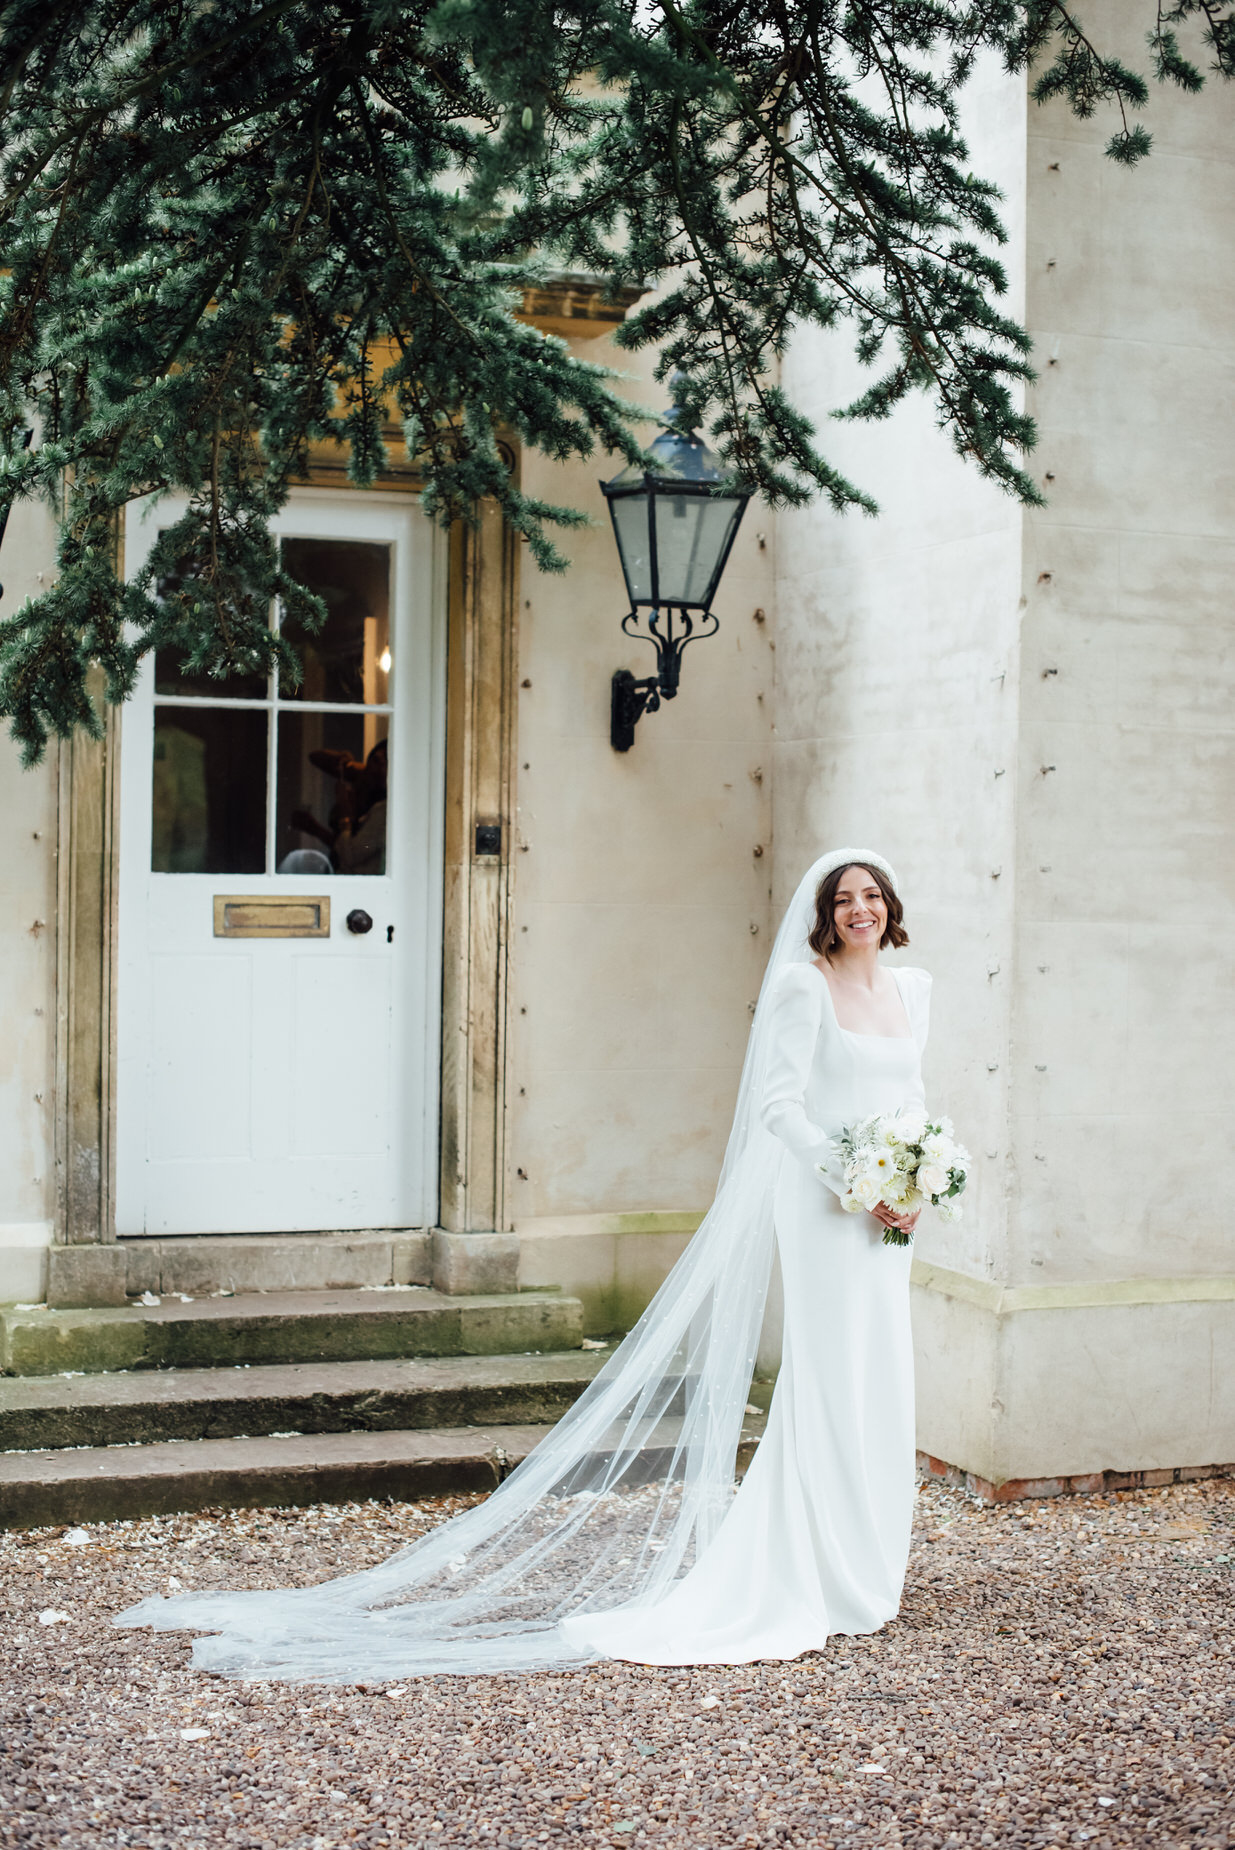 halfpenny london wedding dress, Aswarby bride, authentic wedding photography, Aswarby Rectory Wedding, michelle wood photographer